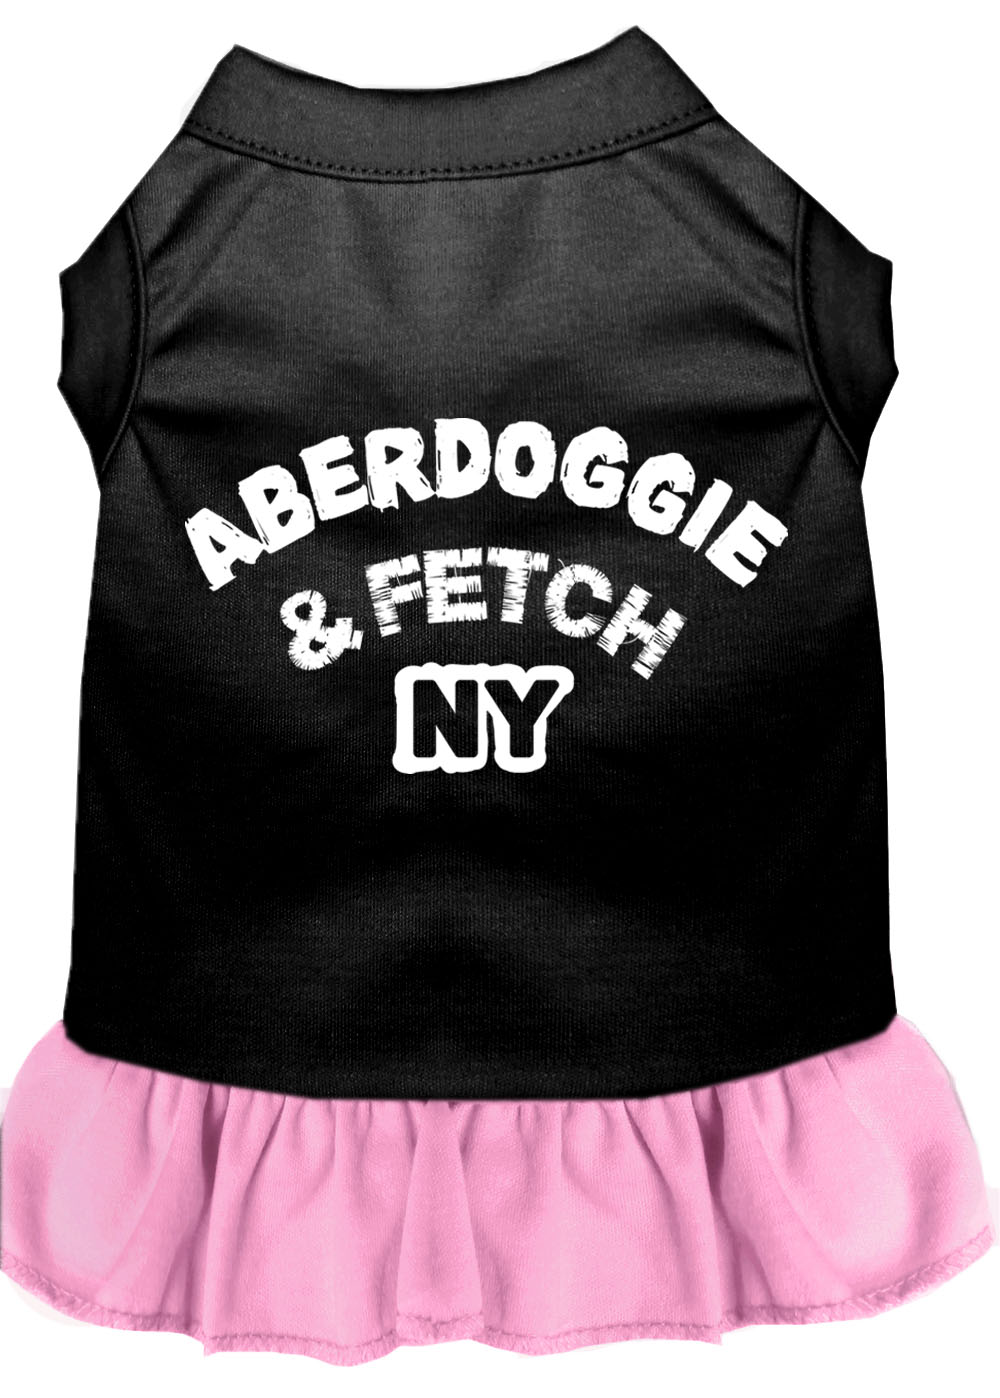 Aberdoggie NY Screen Print Dog Dress Black with Light Pink Lg